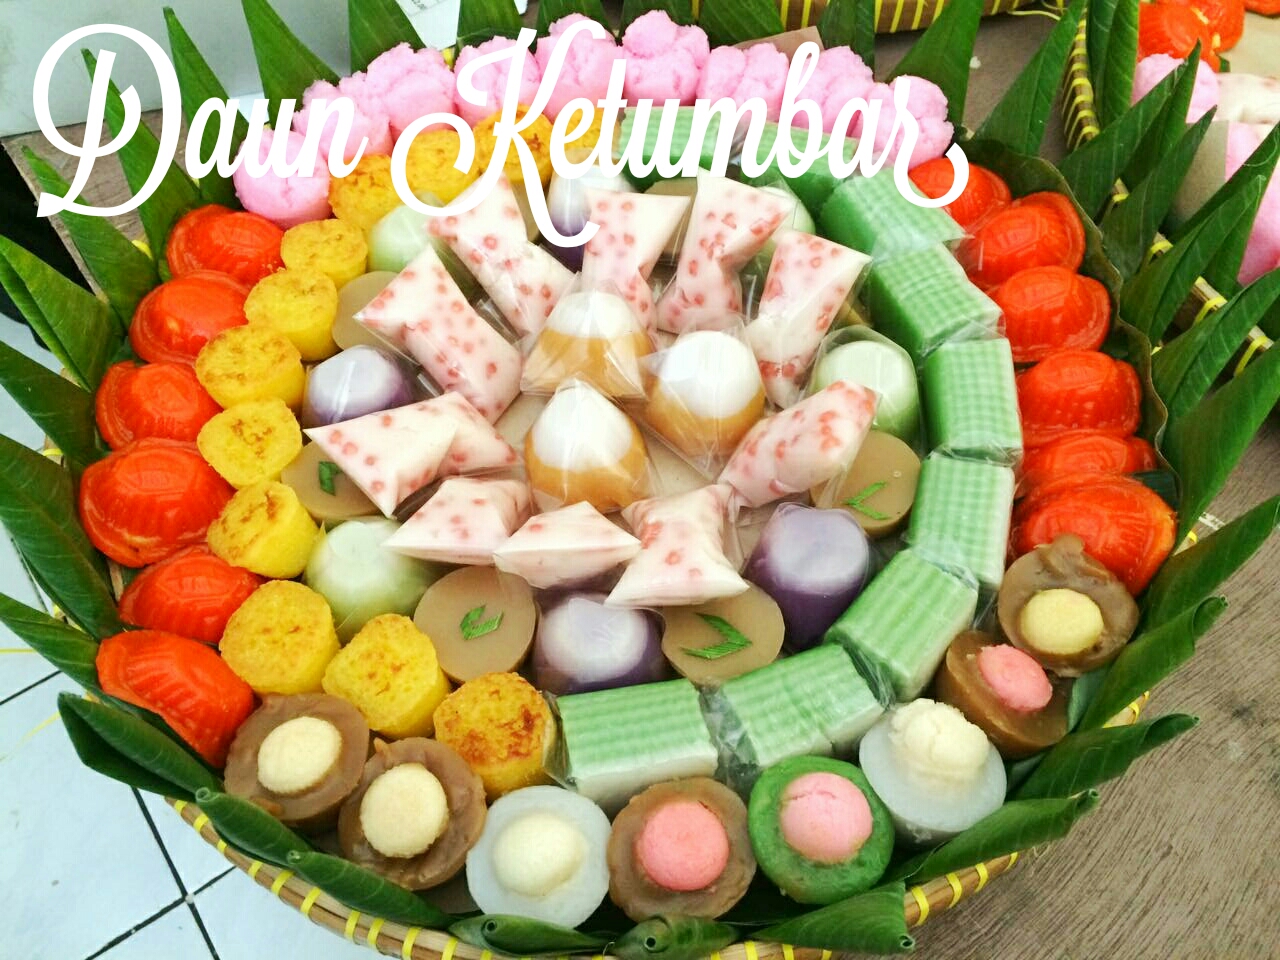 Kue Basah Tradisional Jakarta Pusat ~ Daun Ketumbar Catering | Jagonya